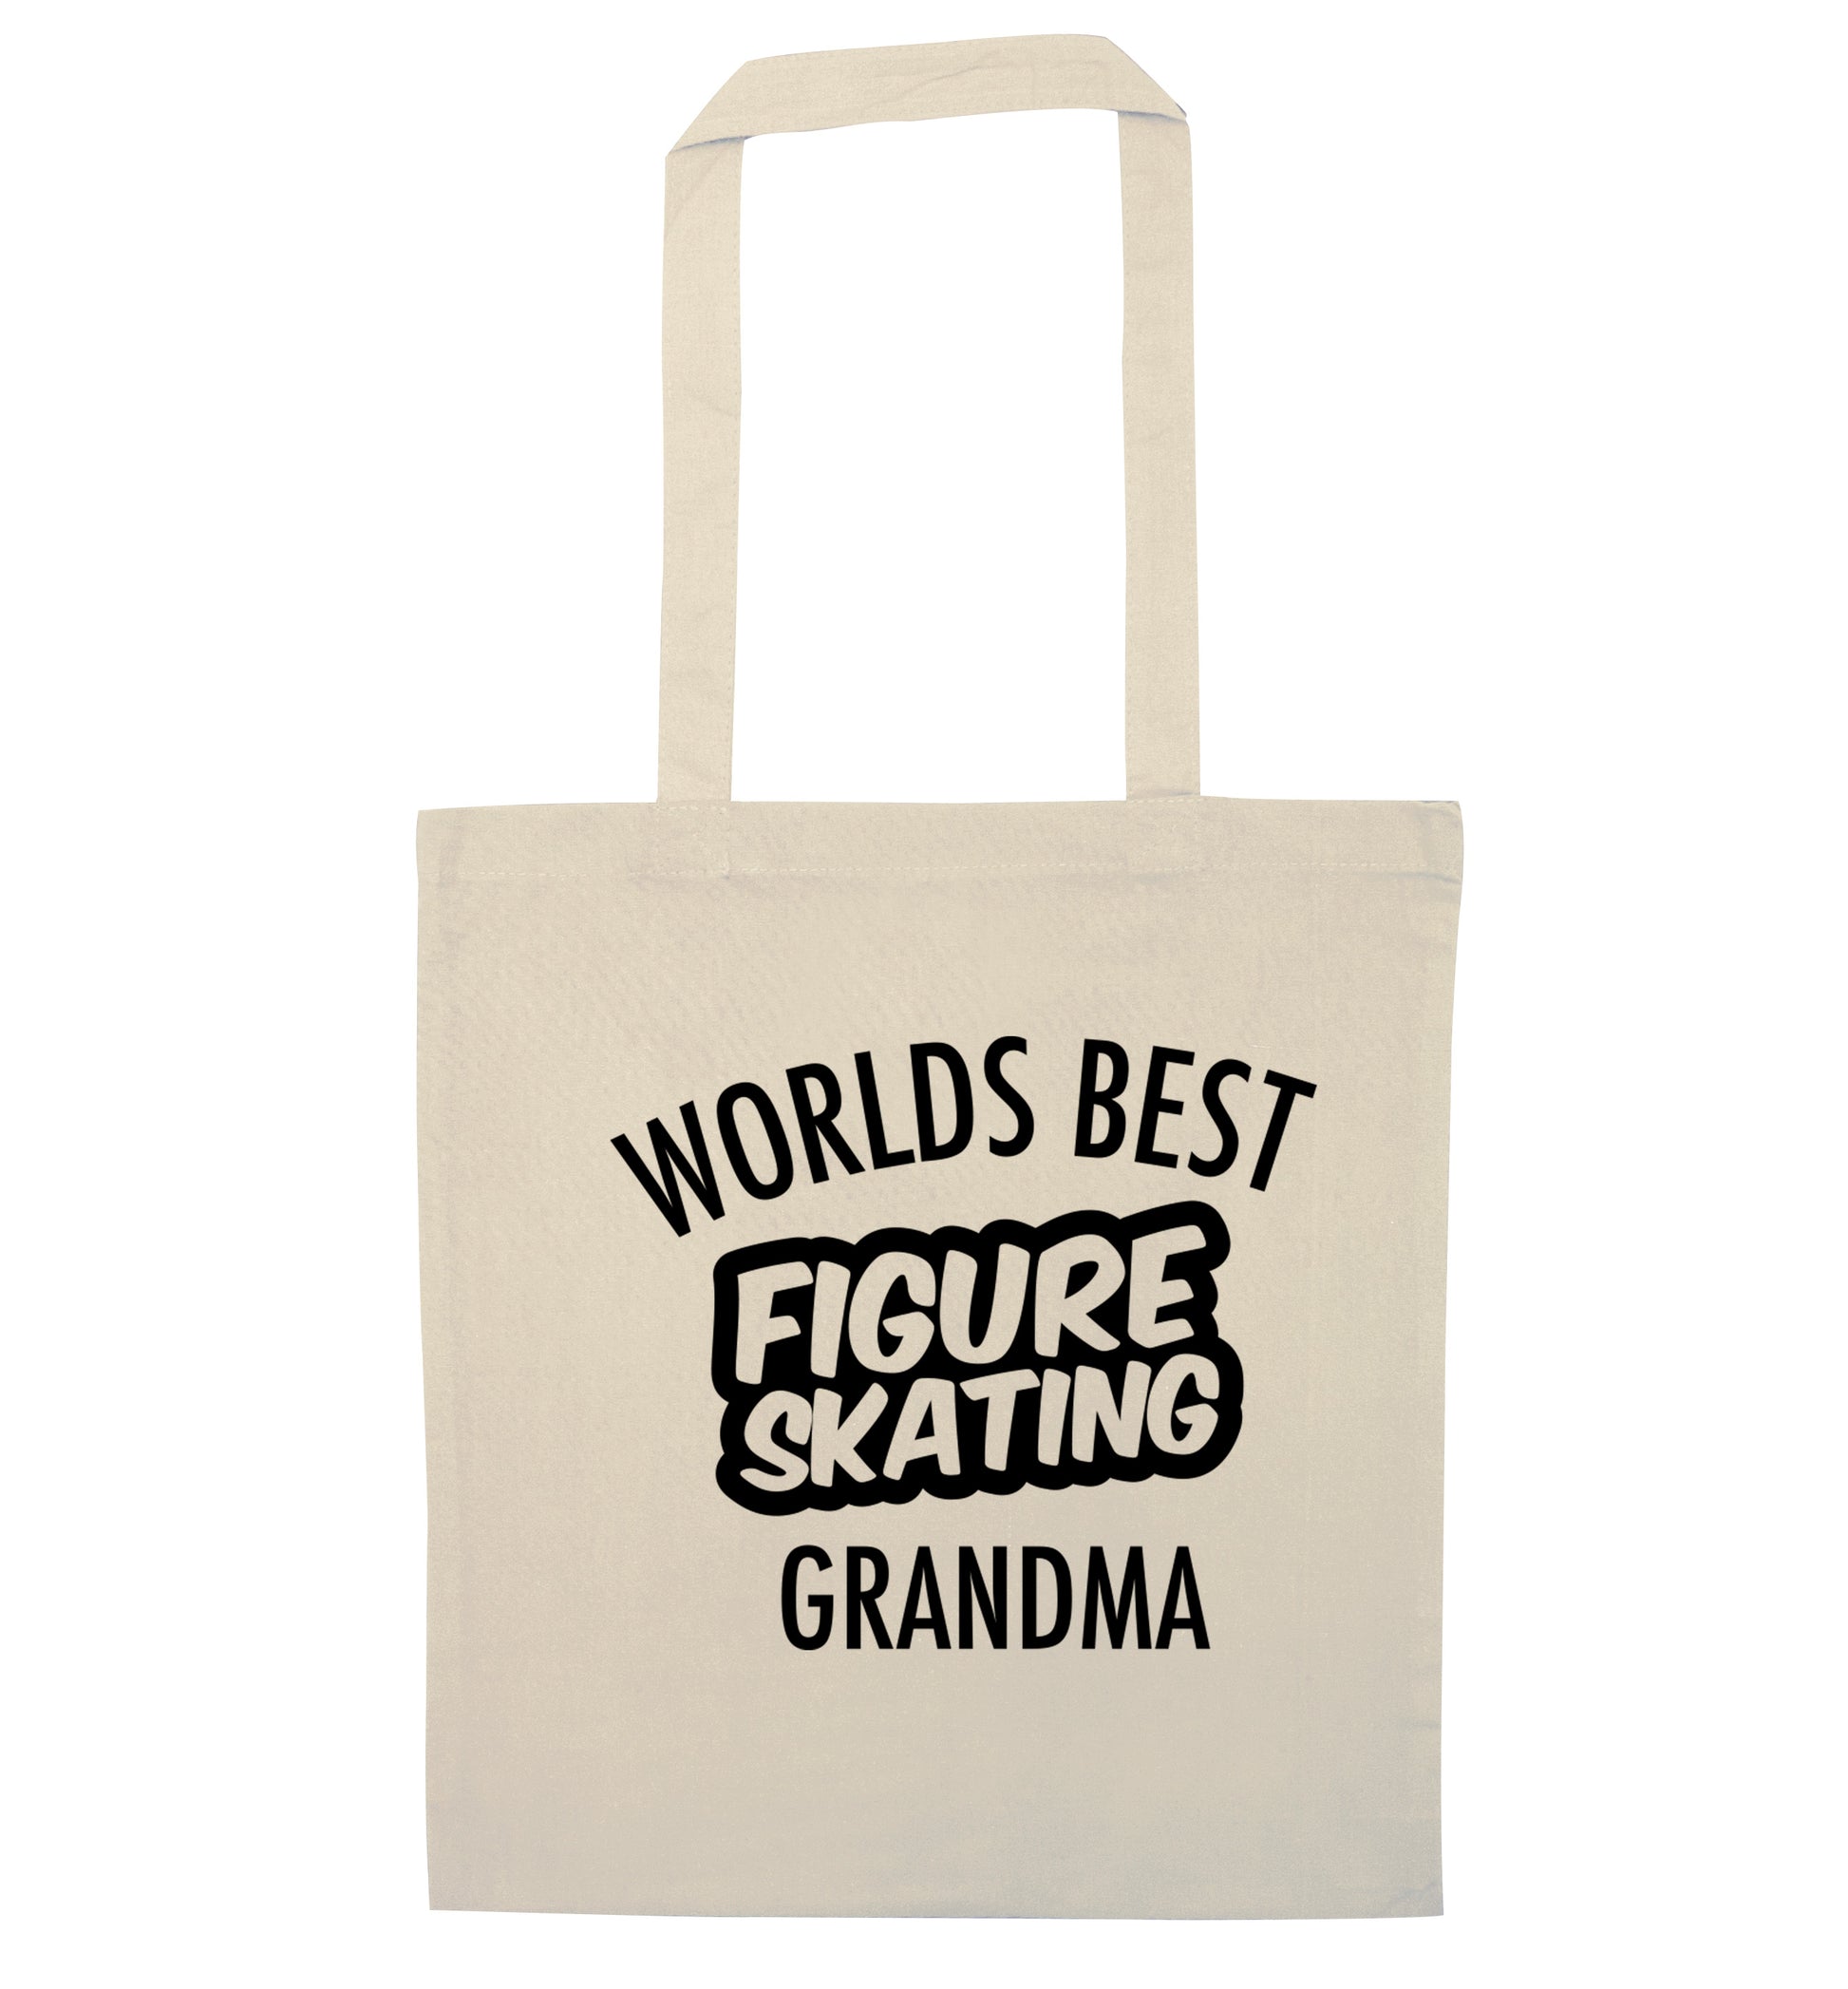 Worlds best figure skating grandma natural tote bag